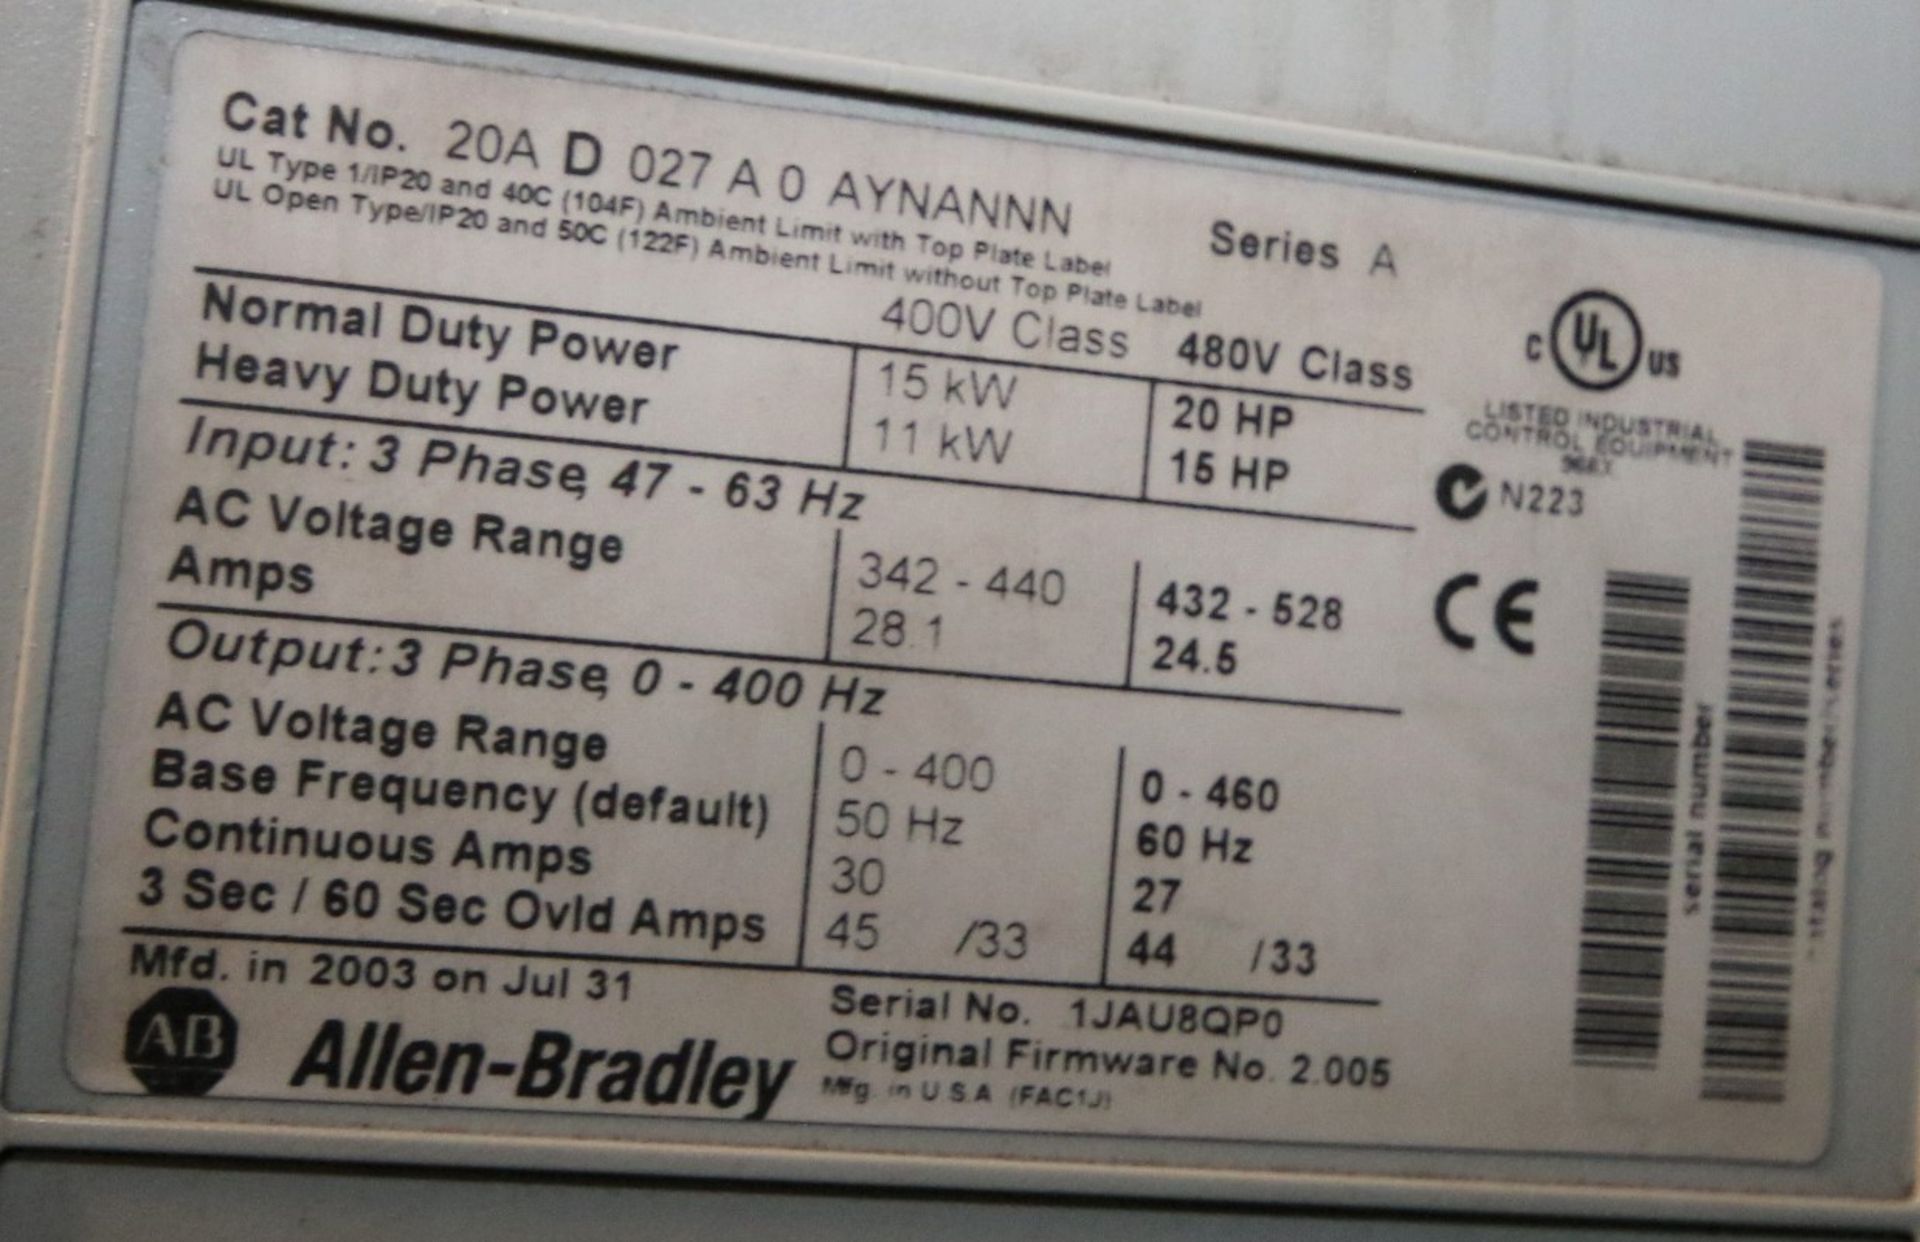 Allen Bradley PowerFlex 70 - 20 hp VFD, Cat # 20A D 027 A 0 AYNANNN, 460V 3 Phase, Series A (W271) - Image 2 of 2